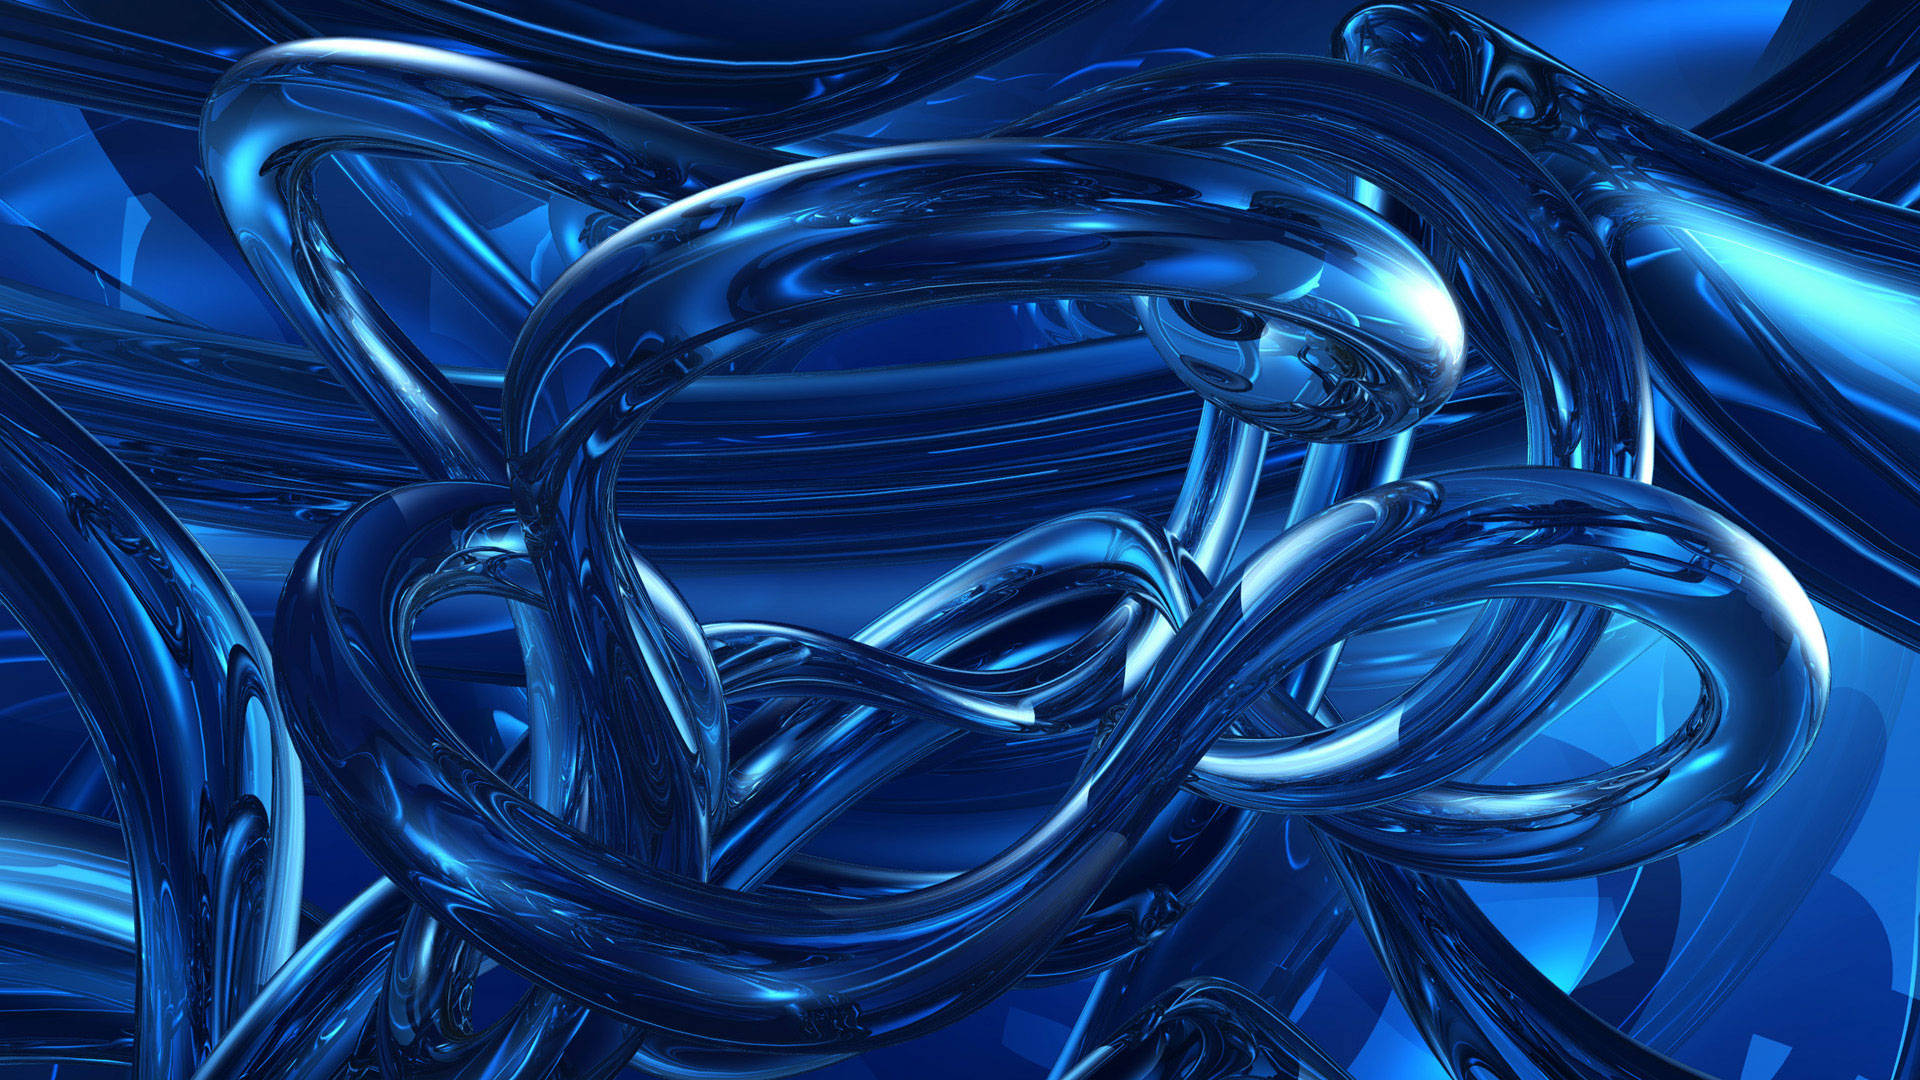 Neon Blue Aesthetic Metallic Coils Artwork Wallpaper